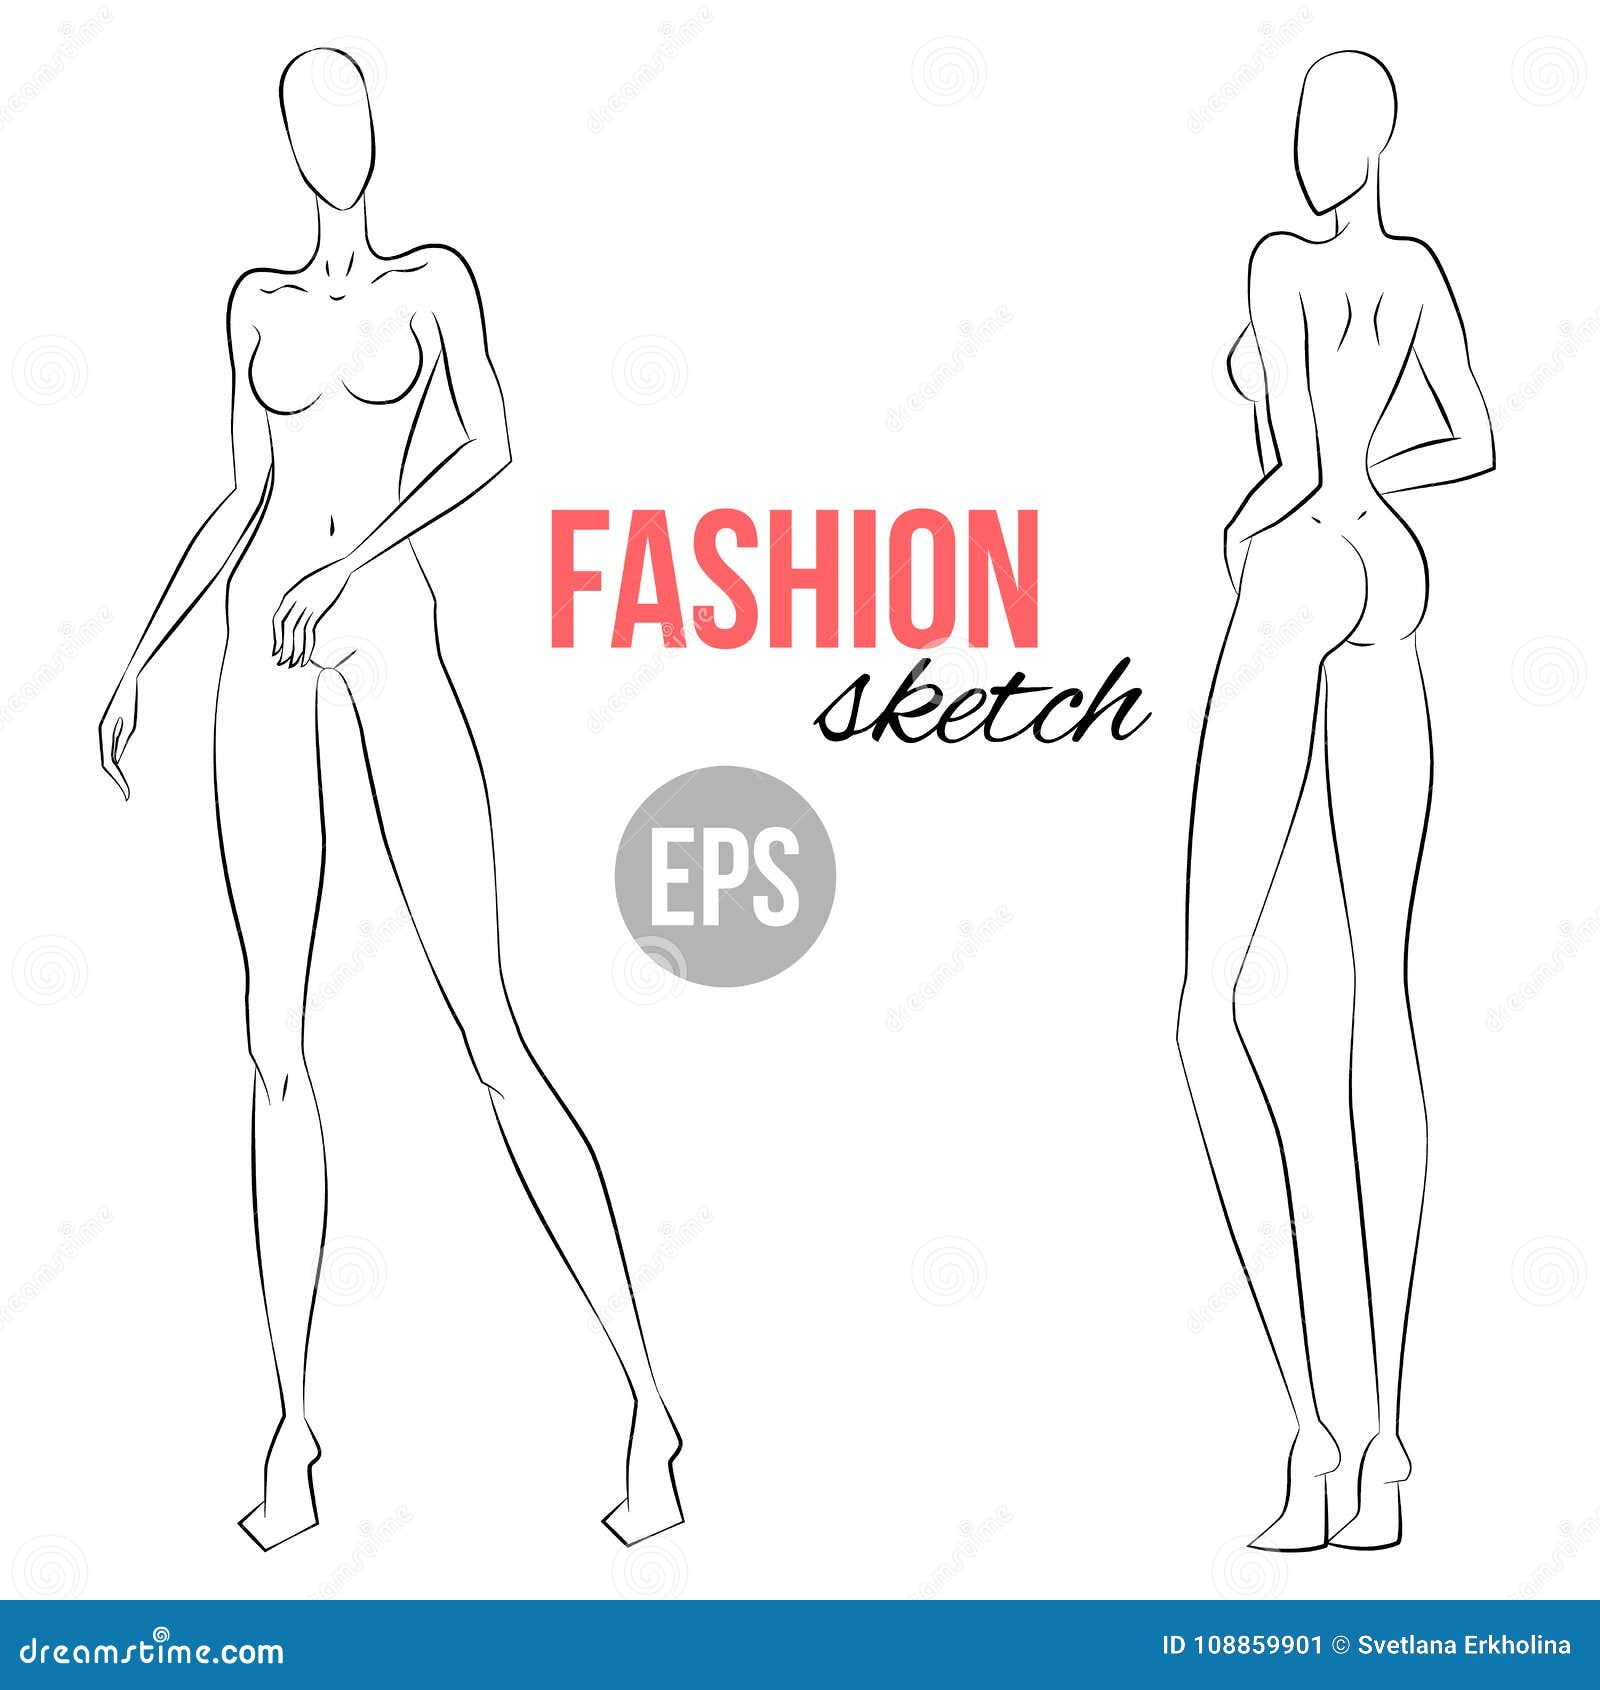 Fashion Photography Poses | Fashion illustrations techniques, Fashion  illustration poses, Fashion drawing